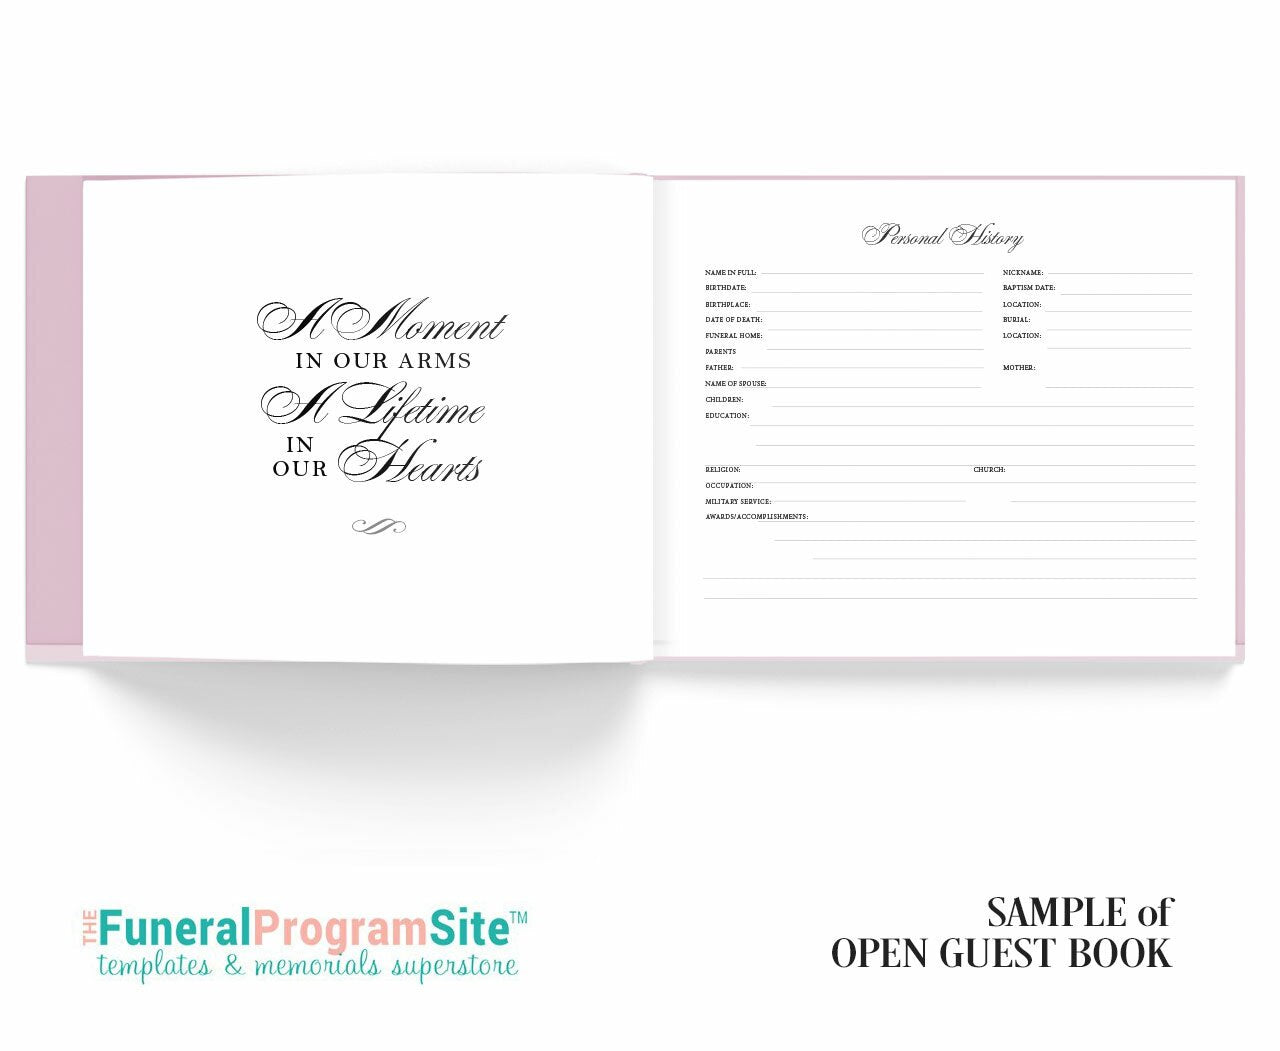 Sweet Flowers Landscape Linen Funeral Guest Book.